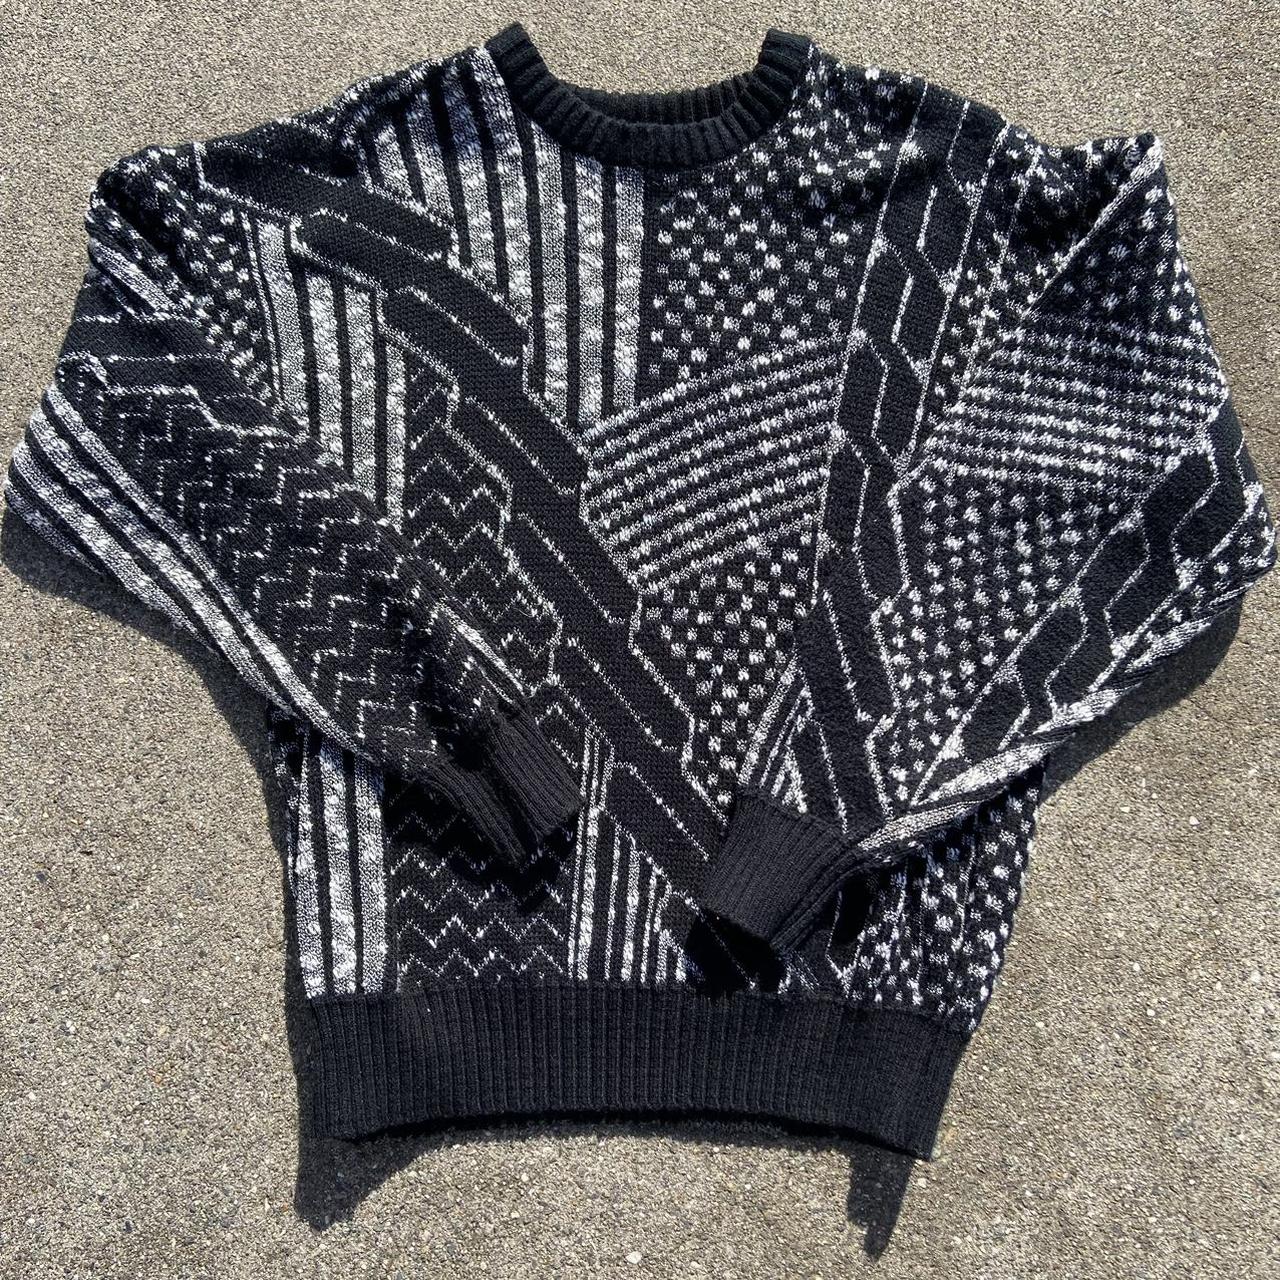 Vintage black and white sweater Measurements: 25... - Depop